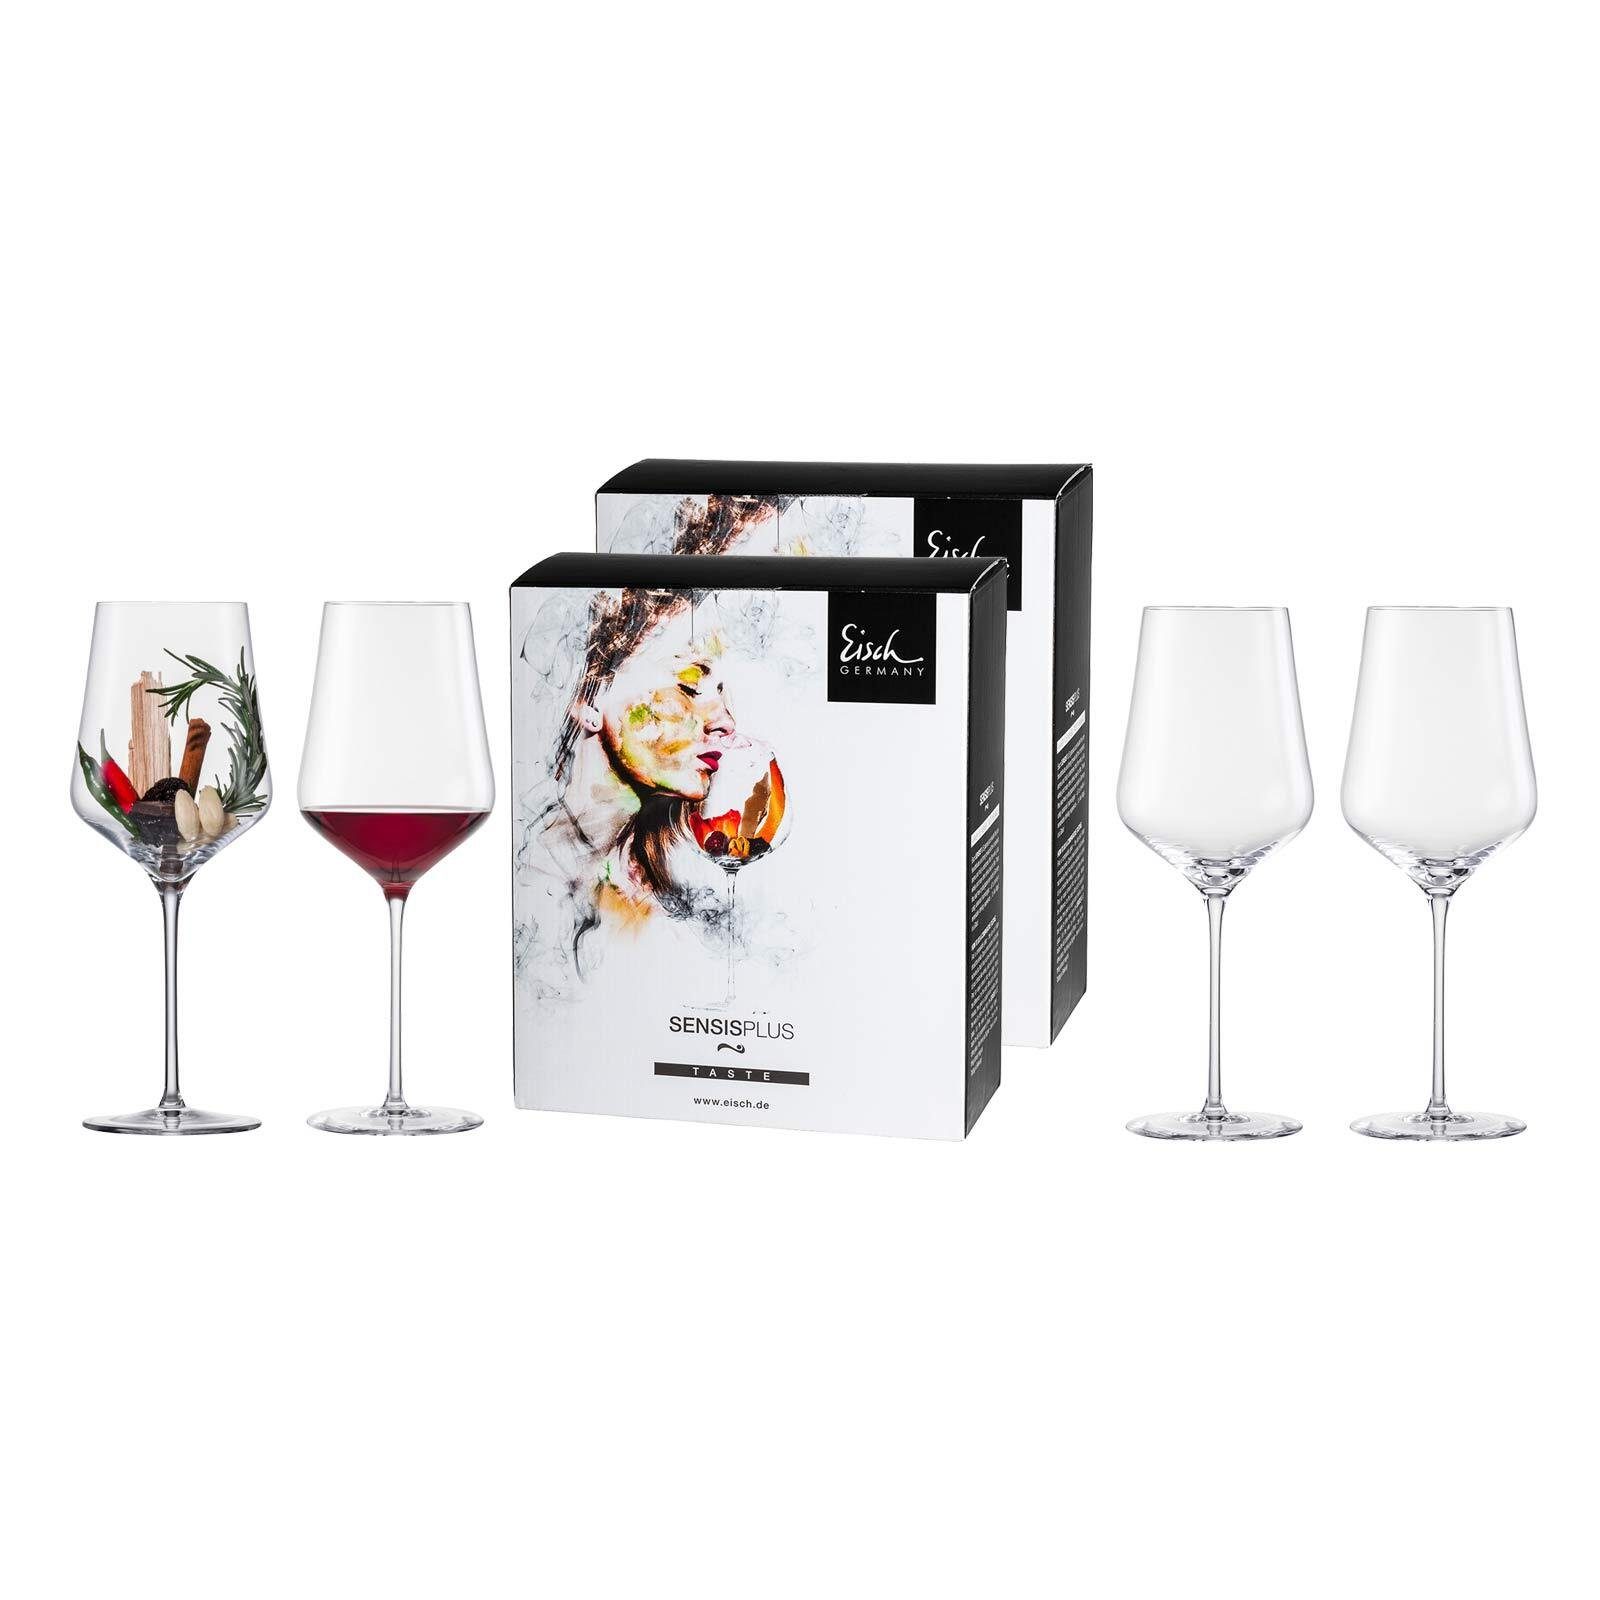 Eisch Rotweinglas Sky SensisPlus, Bleifrei, (Bordeauxglas), 4-teilig ml, Kristallglas, 620